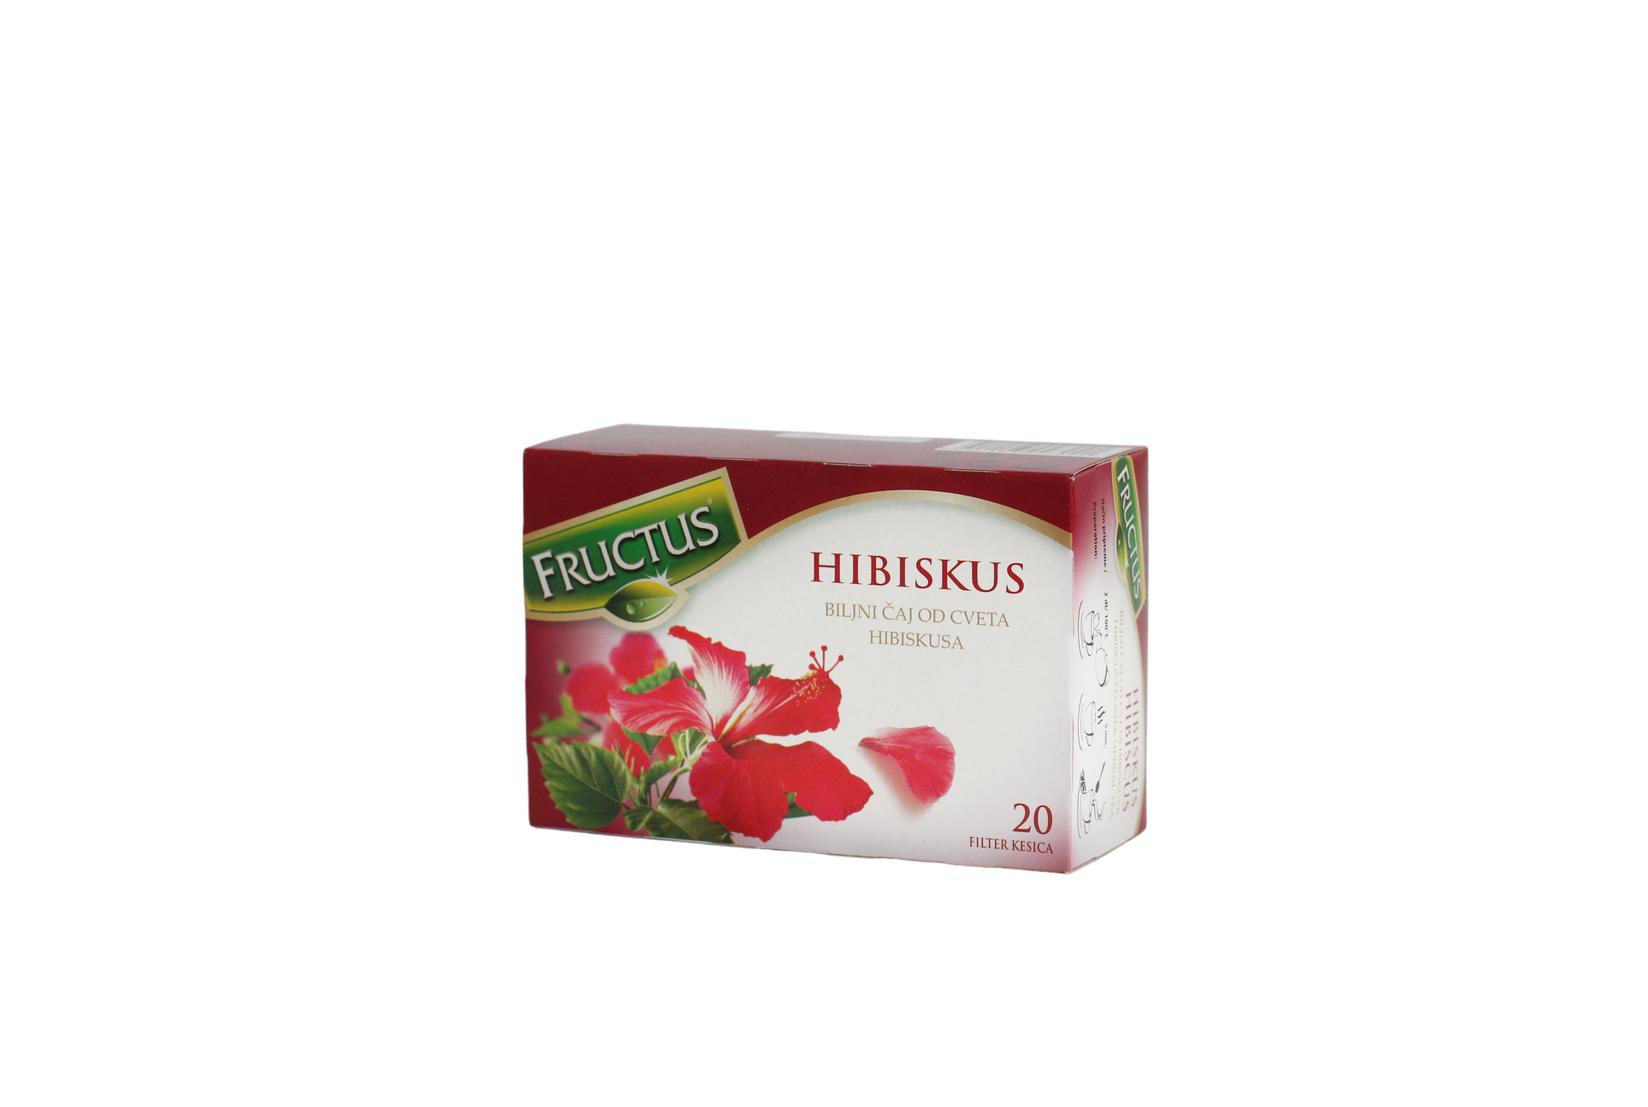 FRUCTUS Čaj od hibiskusa 30g, 20x1.5g